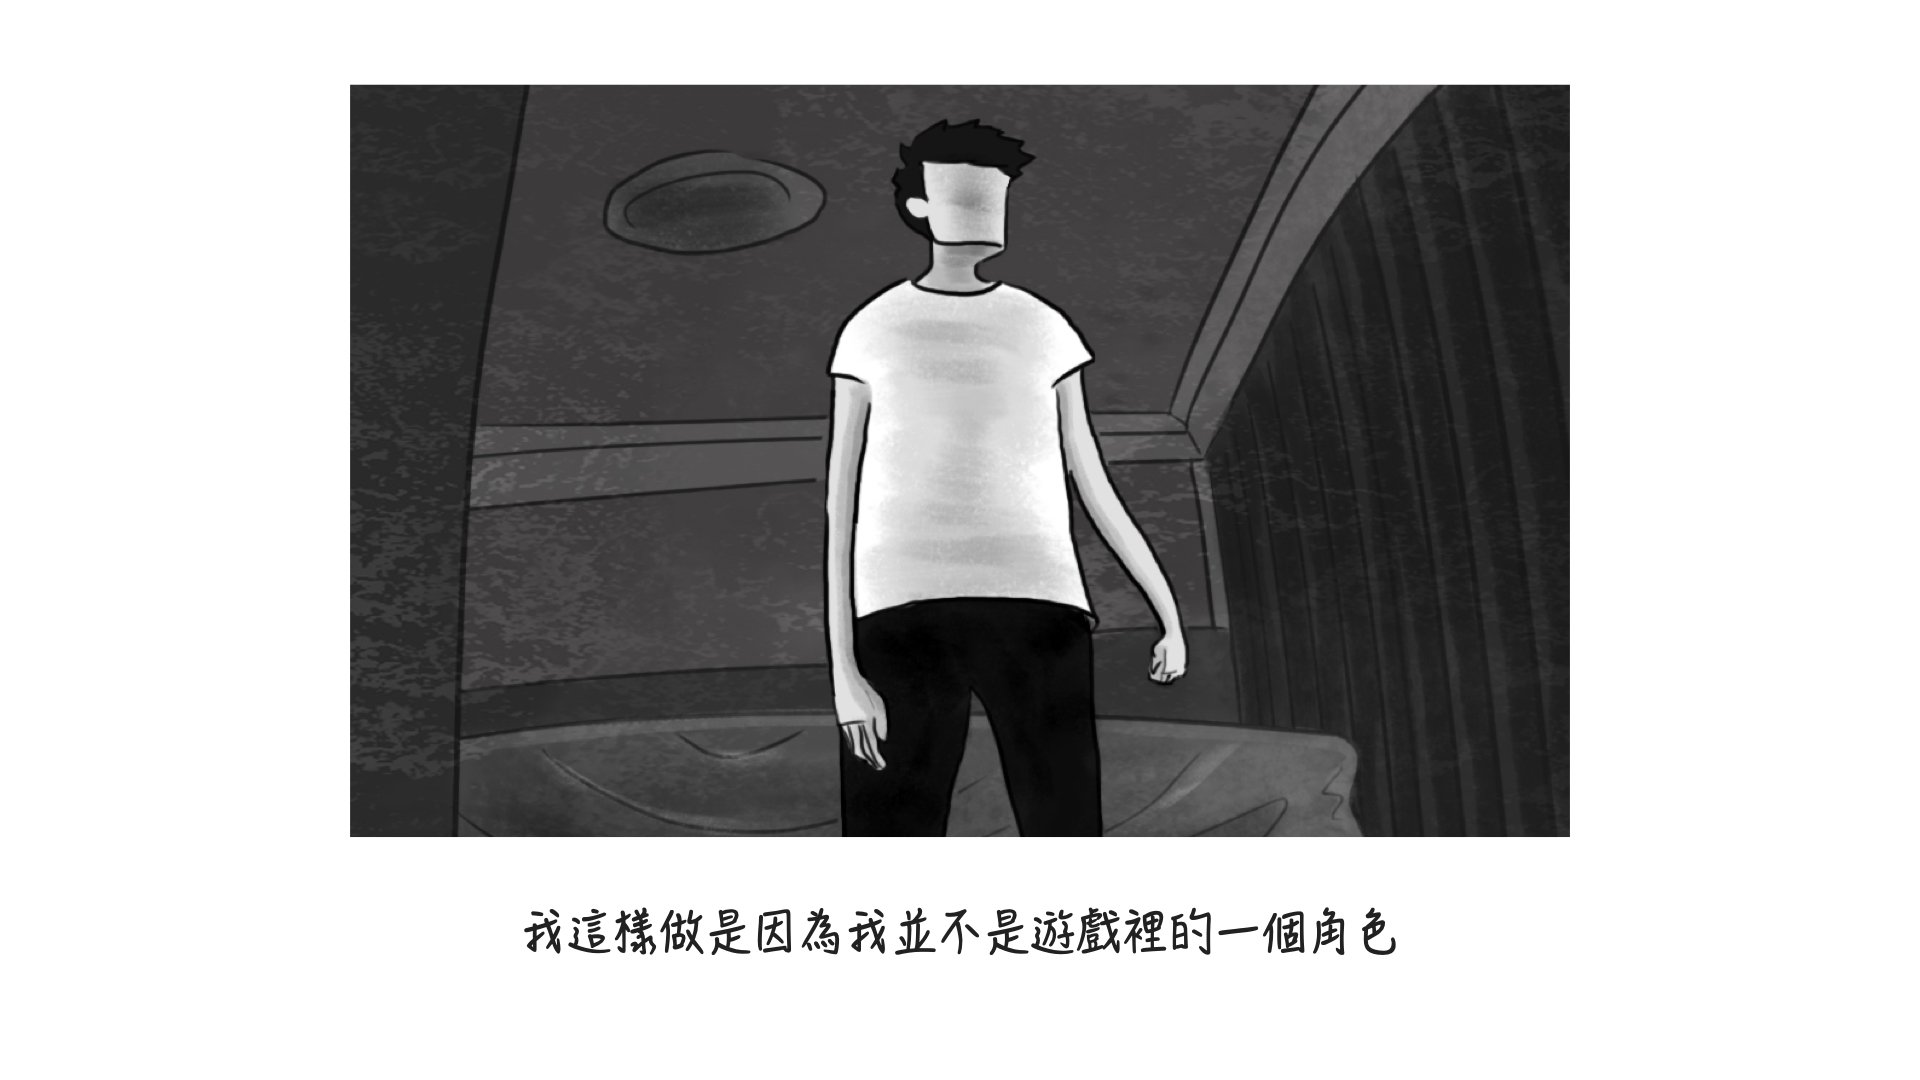 PP_Comic_Chinese_TW.057.jpeg